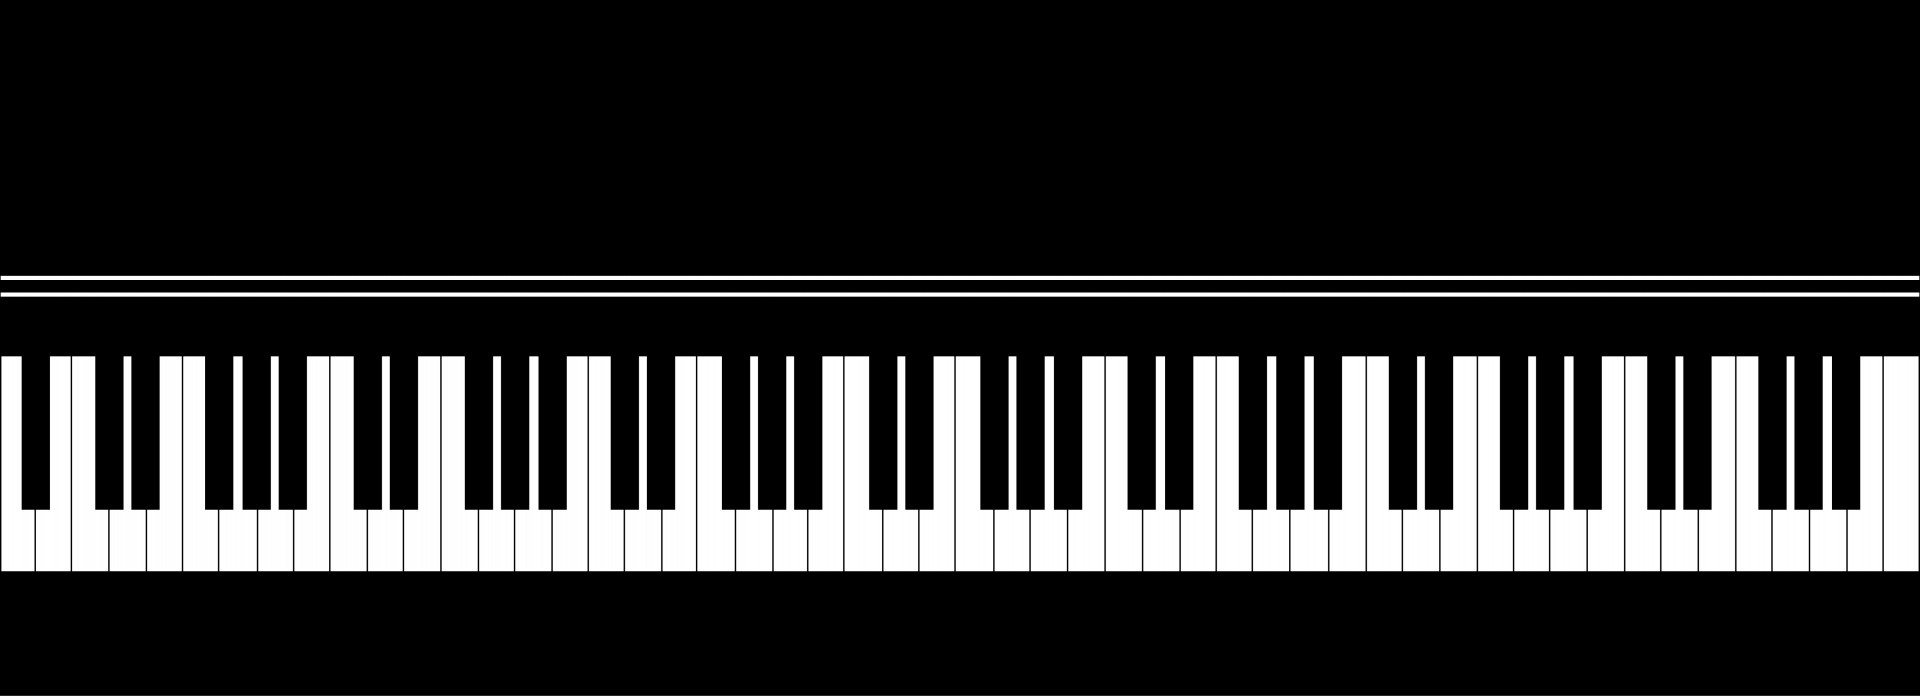 Клавиатура рояля сверху